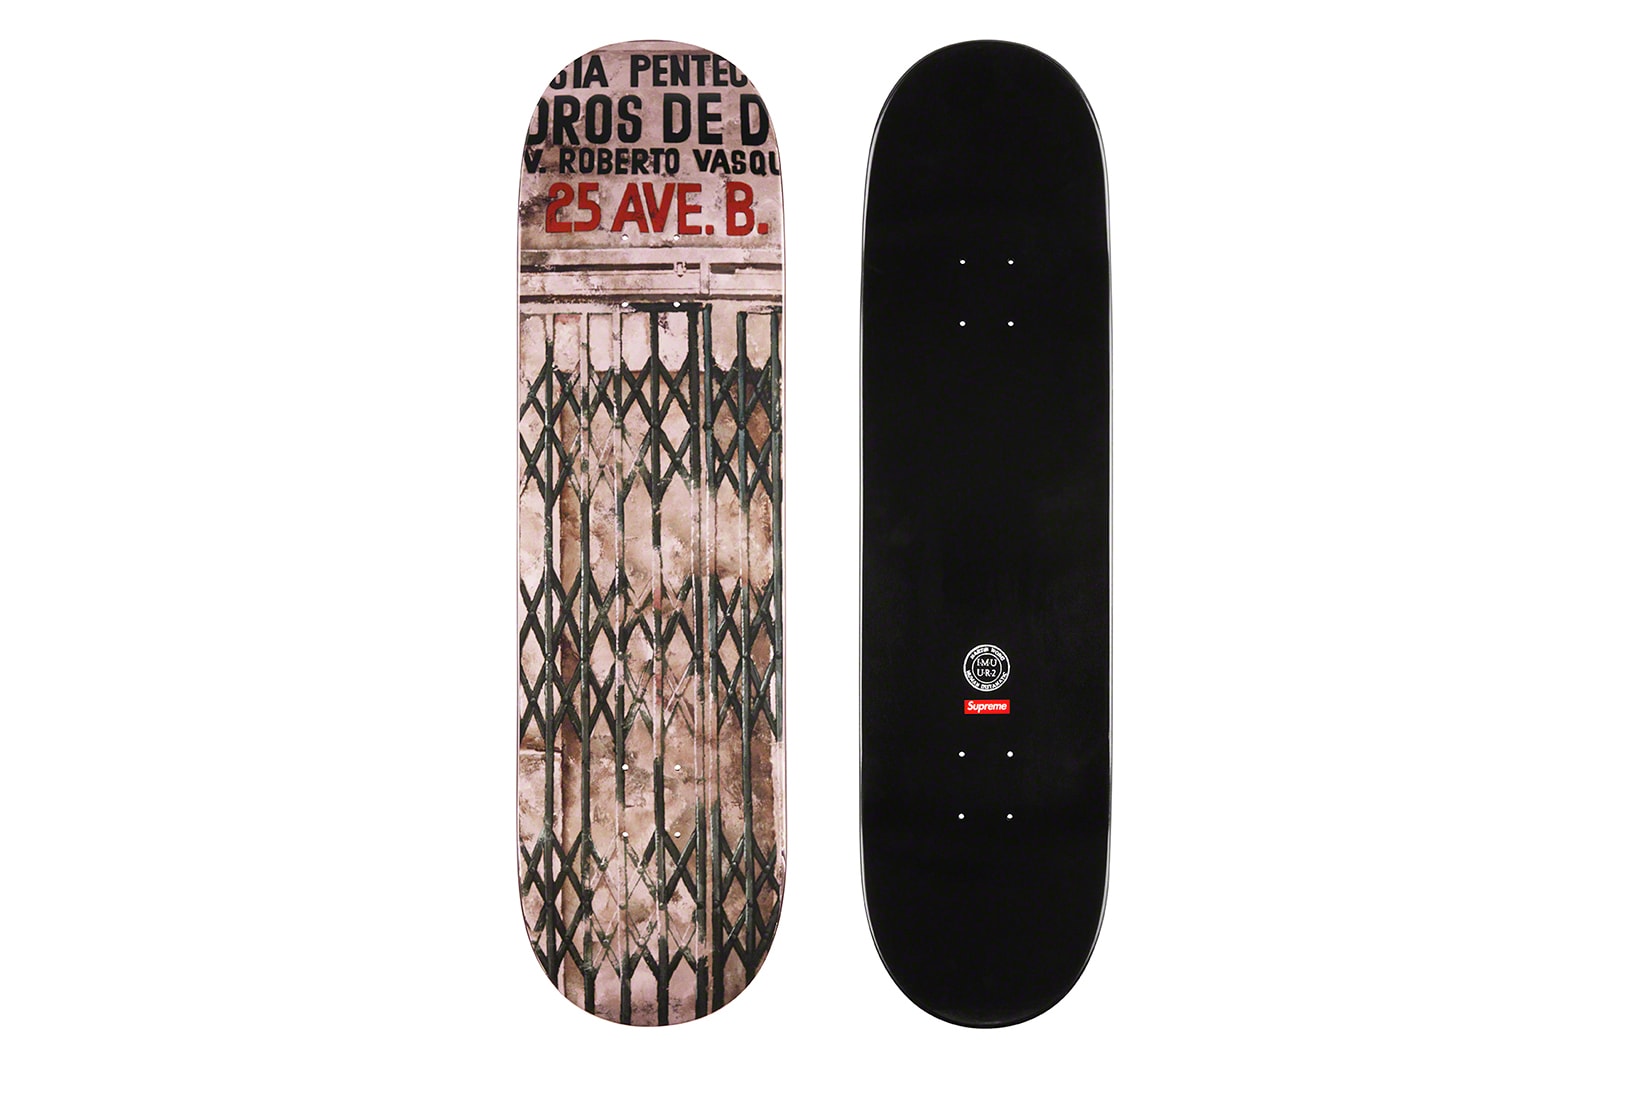 Martin Wong x Supreme Collection Skateboard Deck